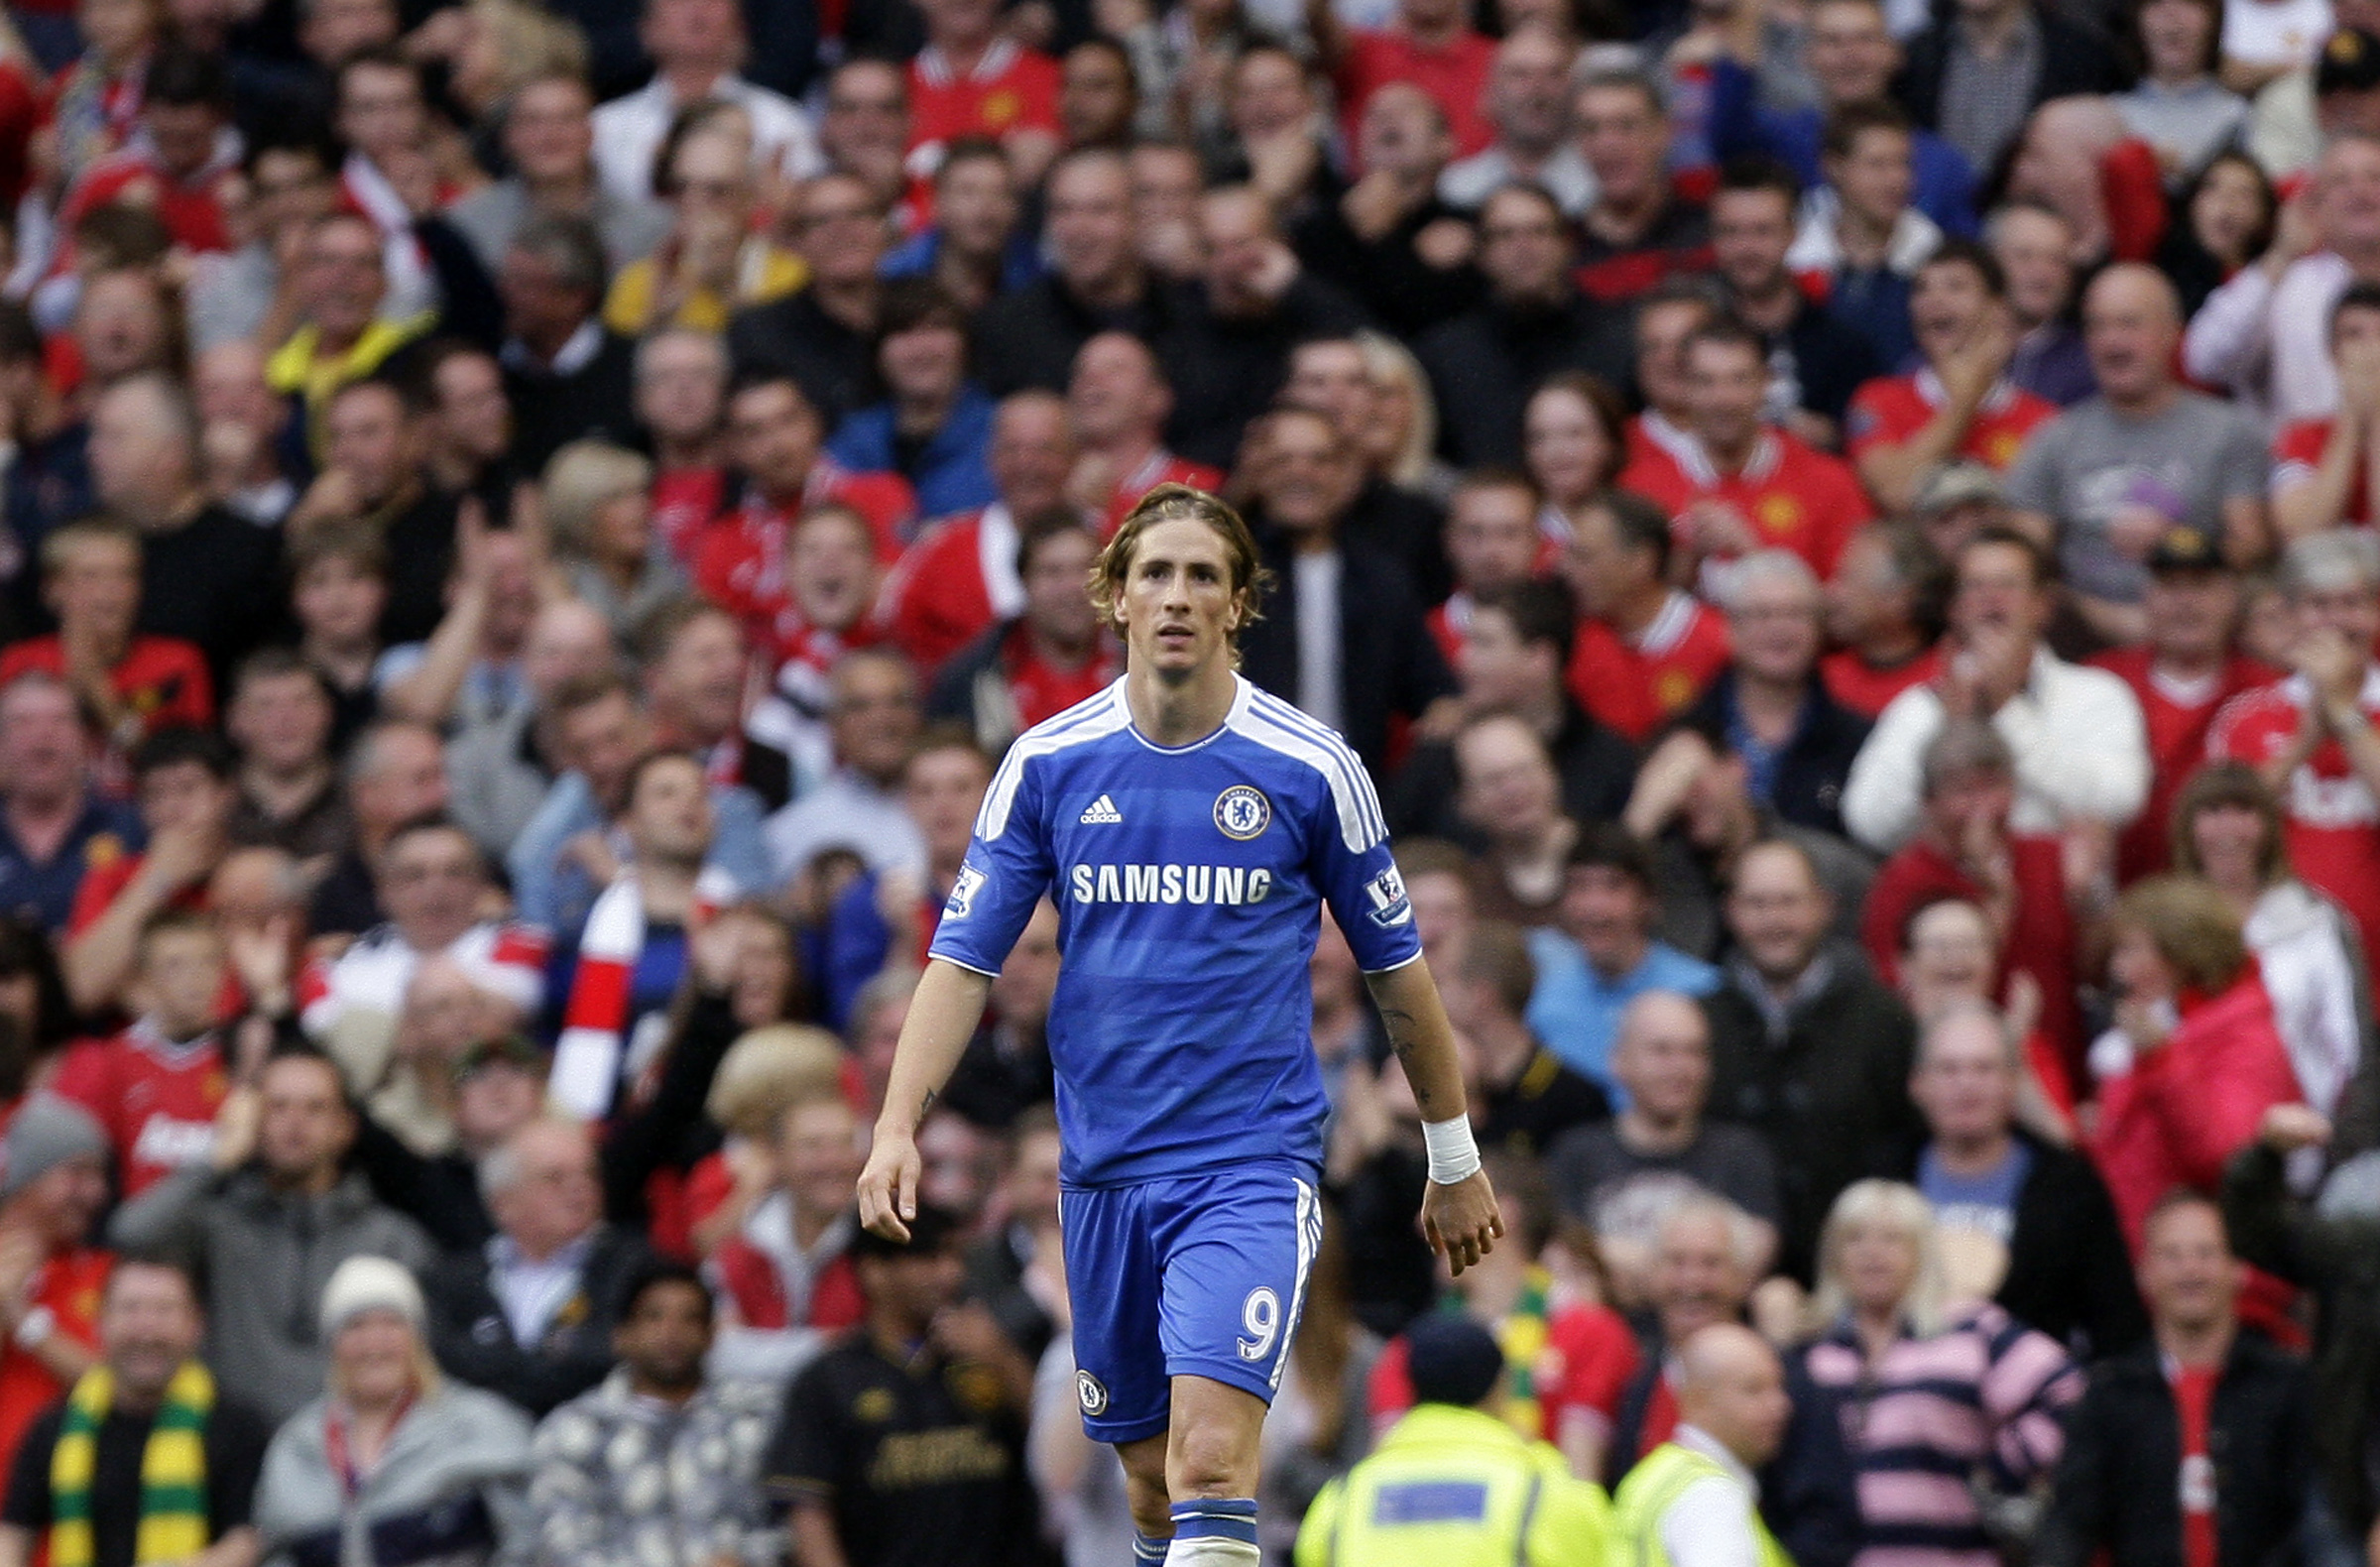 Football, Fernando Torres, Chelsea - Fernando Torres - HD Wallpaper 